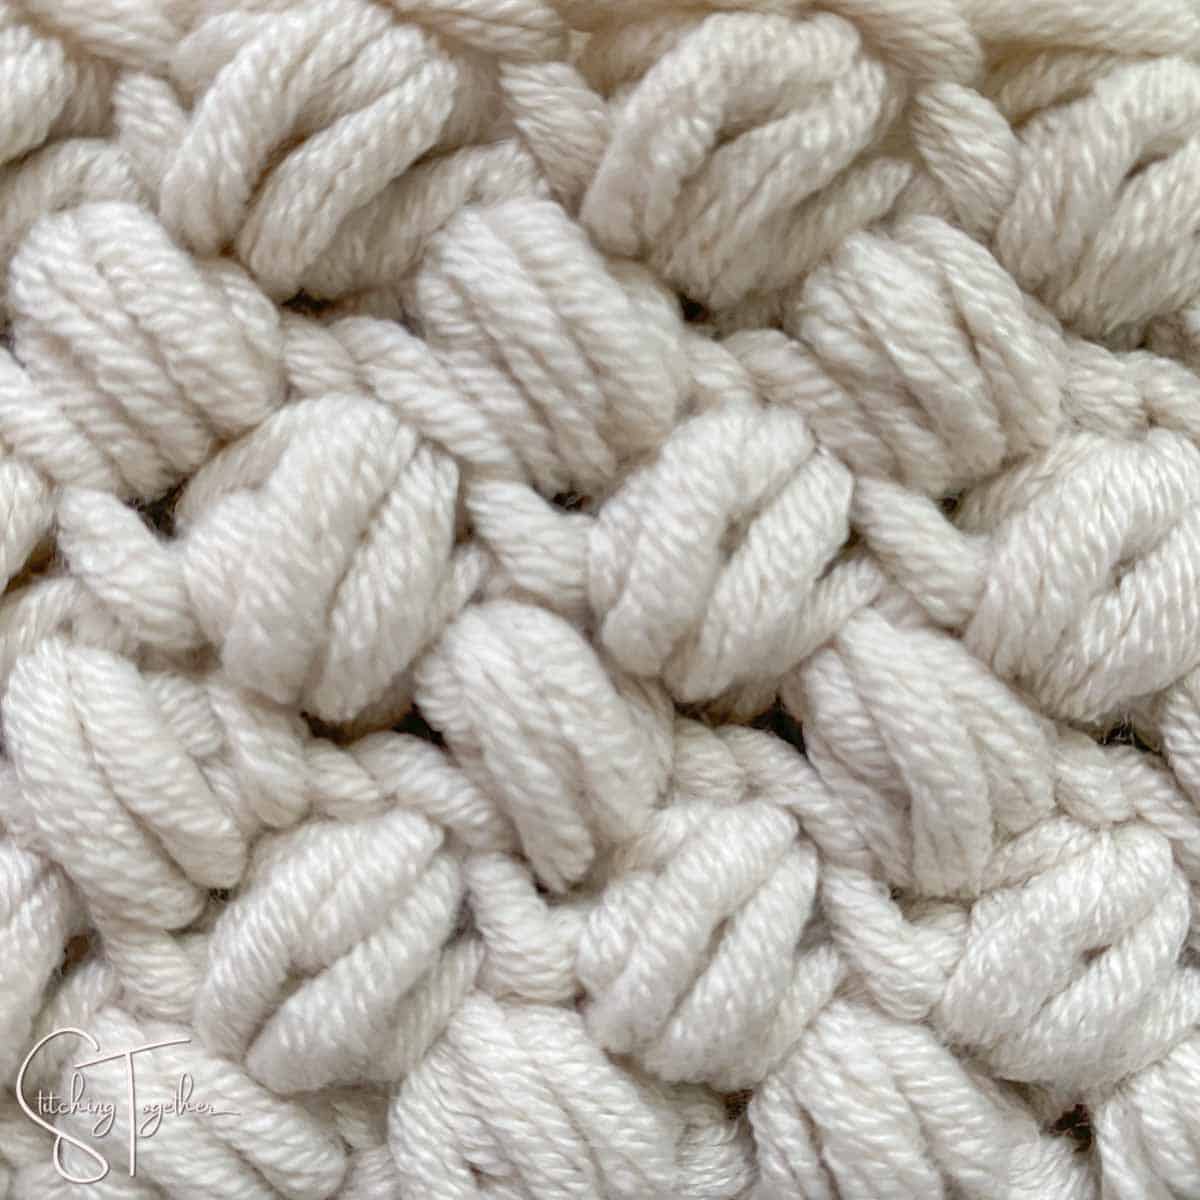 super close up view of the crochet bean stitch